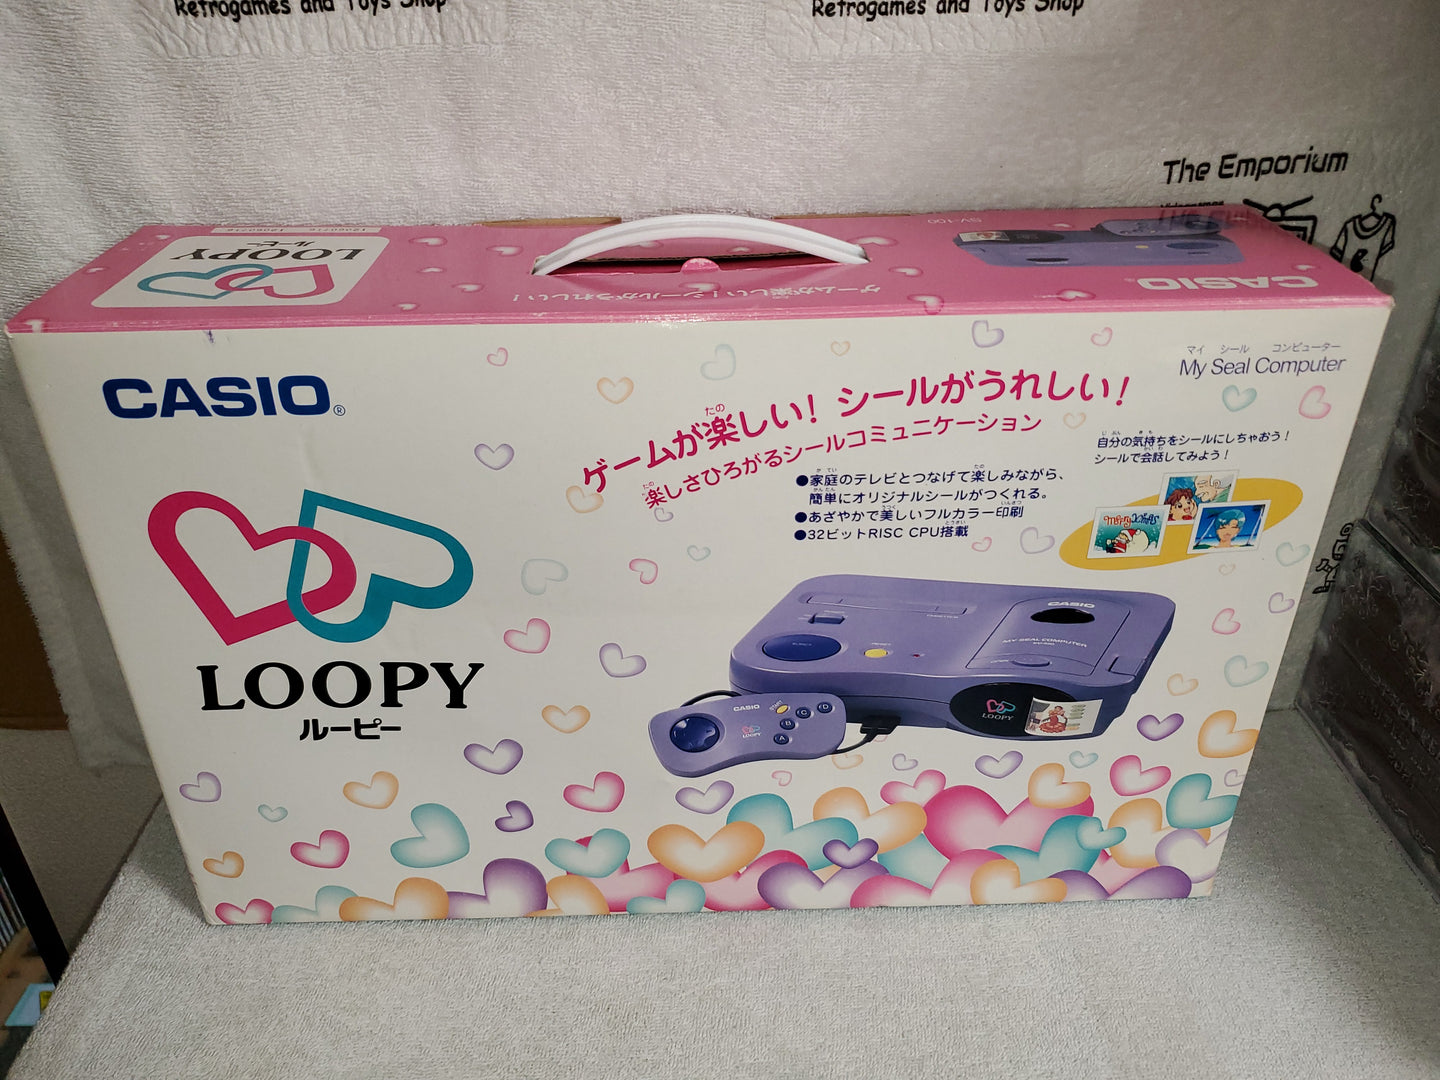 Casio Loopy Sv-100 COMPLETE IN BOX - casio